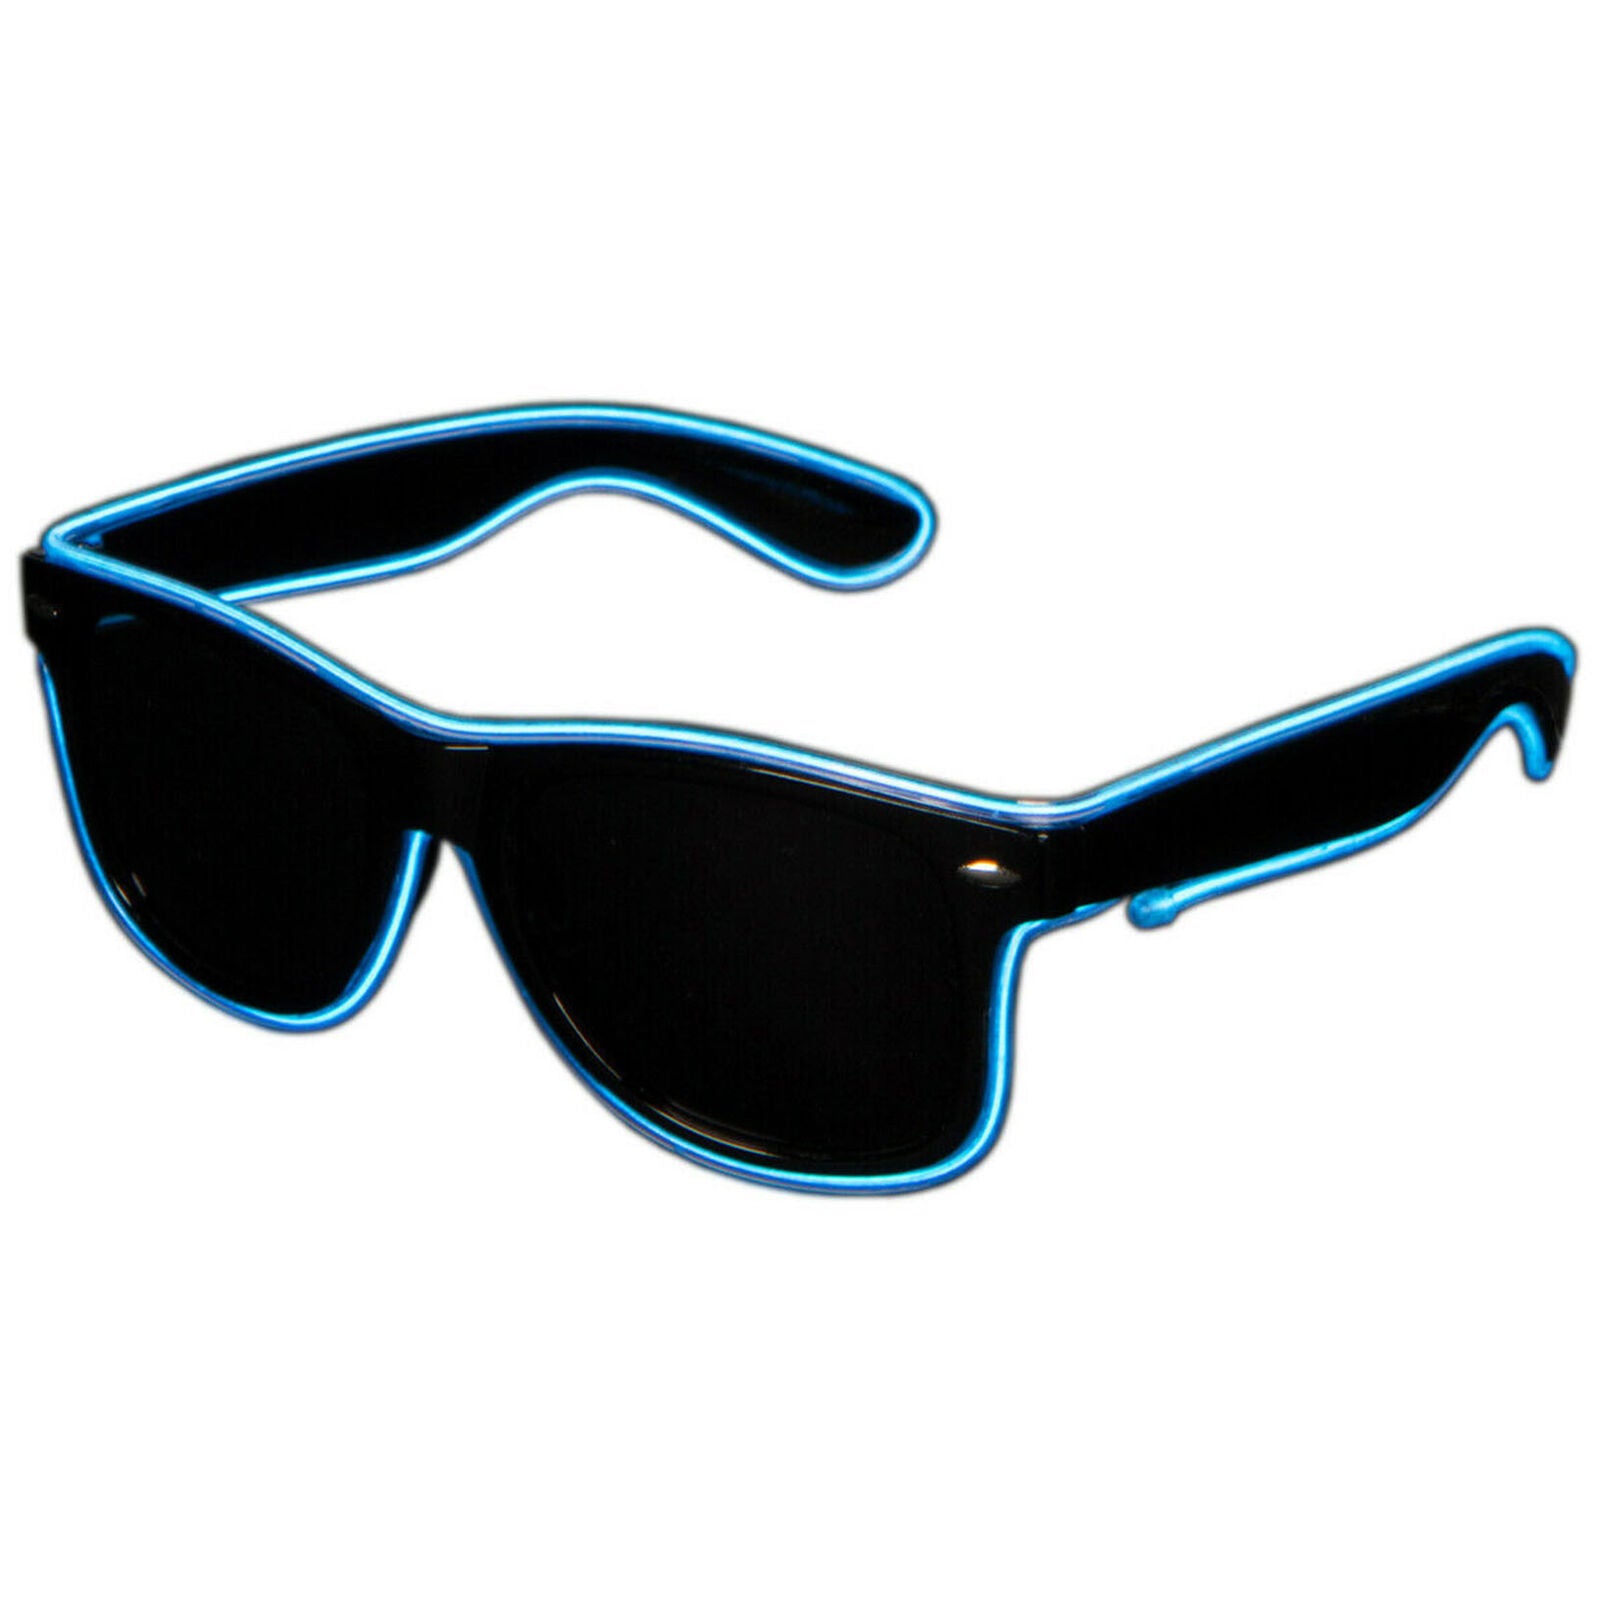 El-Wire Aqua Blue LED Sunglasses Rectangular Rave Burning man Party Neon Lightup